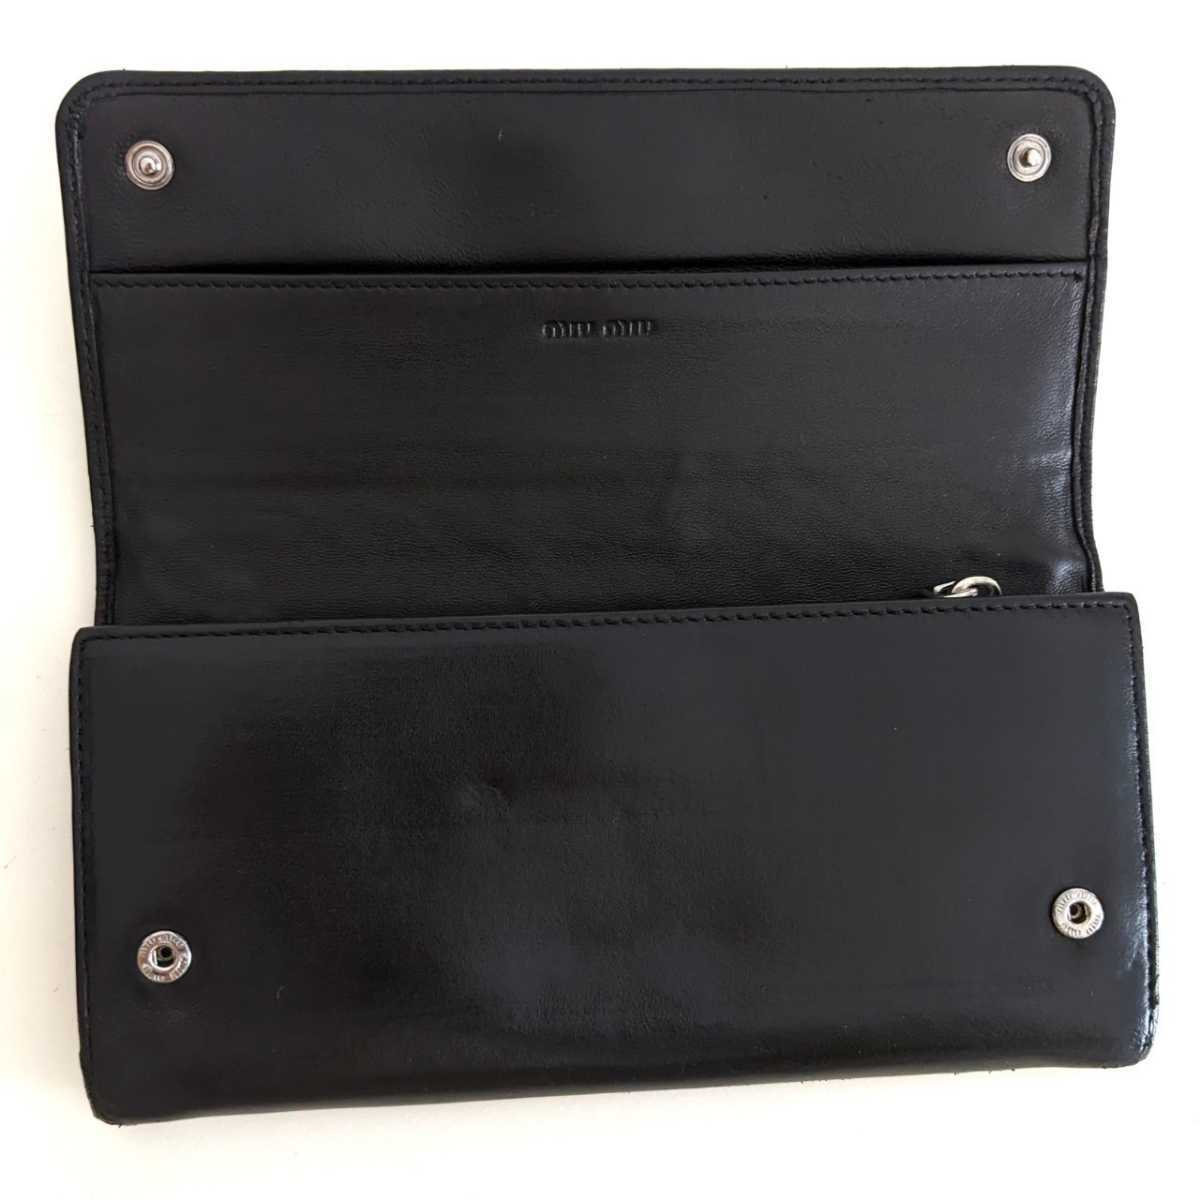  MiuMiu studs Vintage leather long wallet original leather antique wallet black black Prada PRADA miumiu lady's men's 